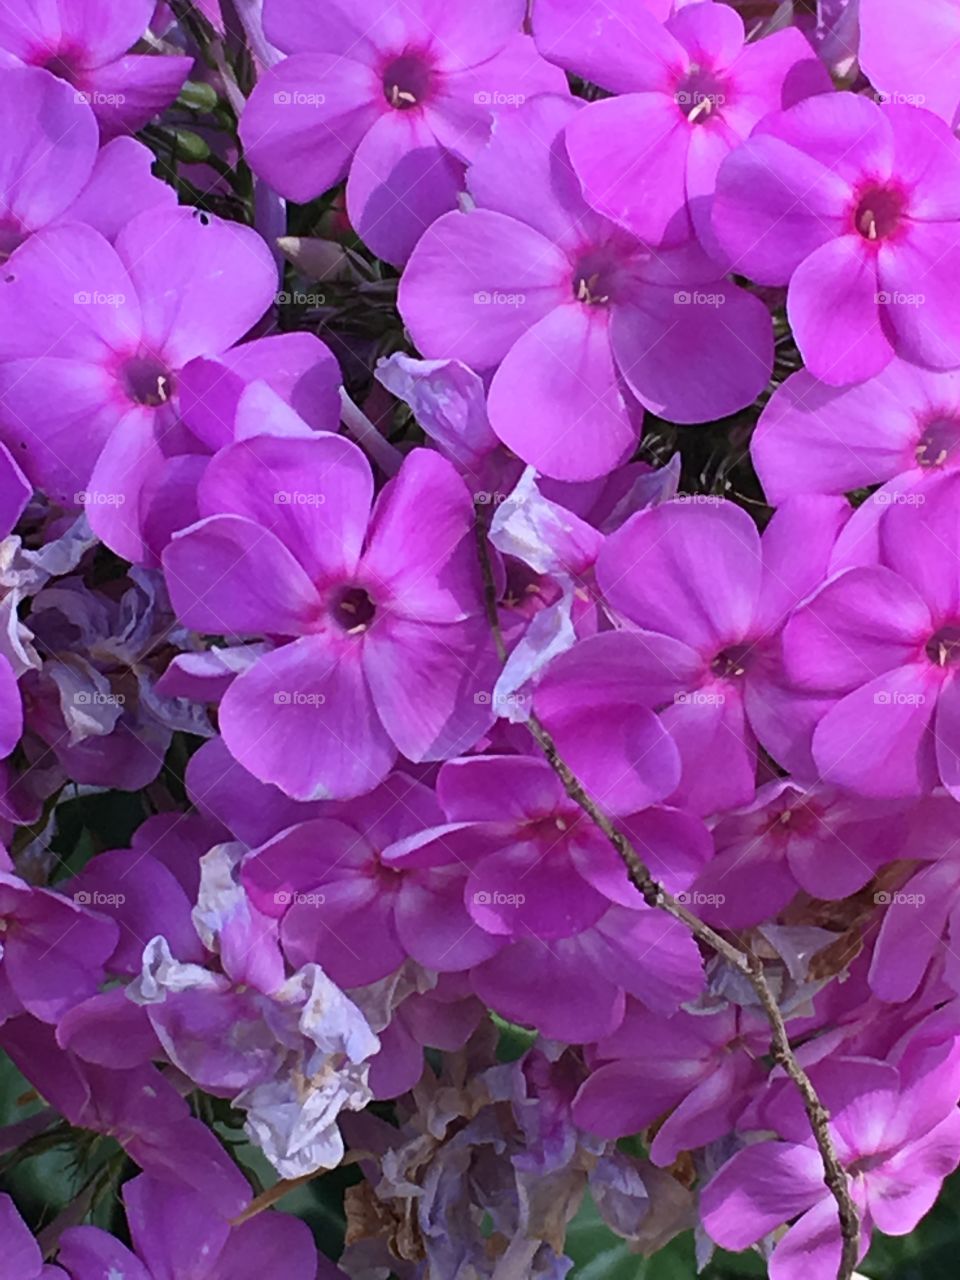 Light purple flowers 